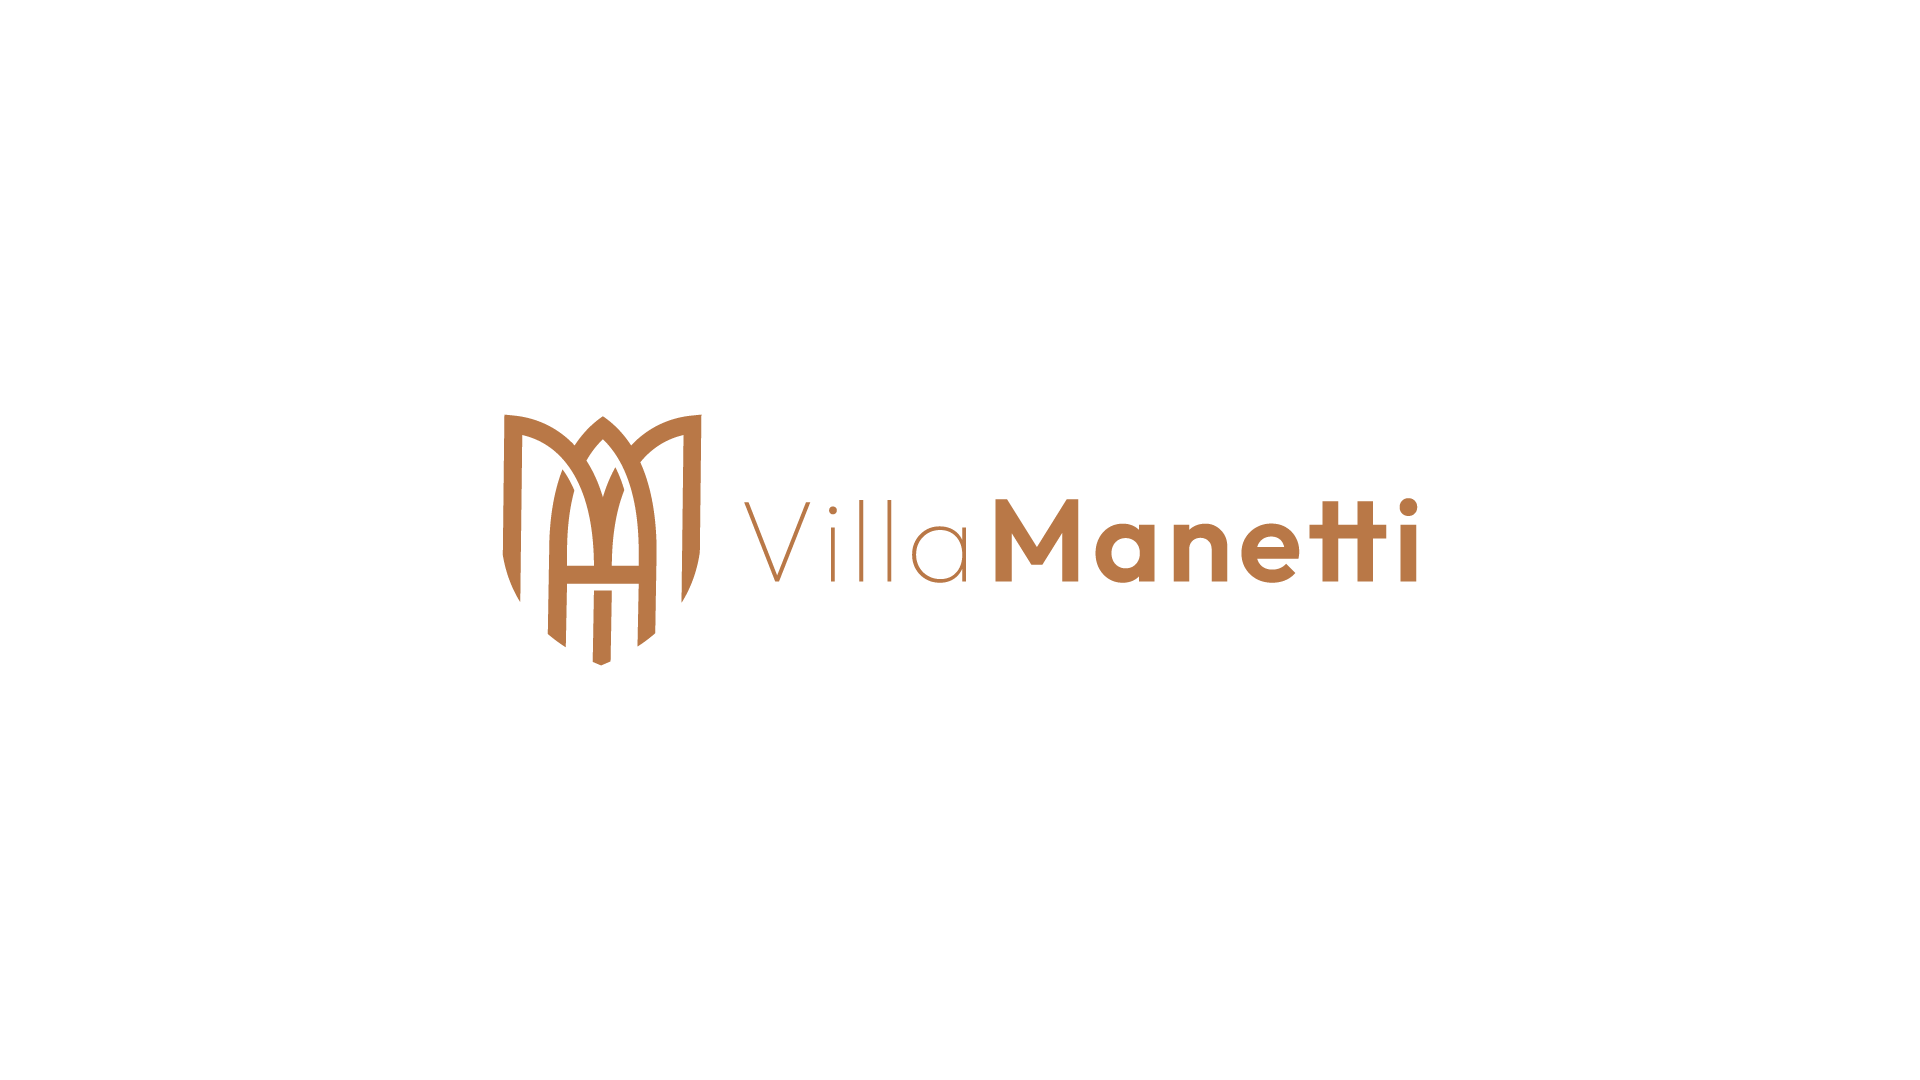 Vila Manetti